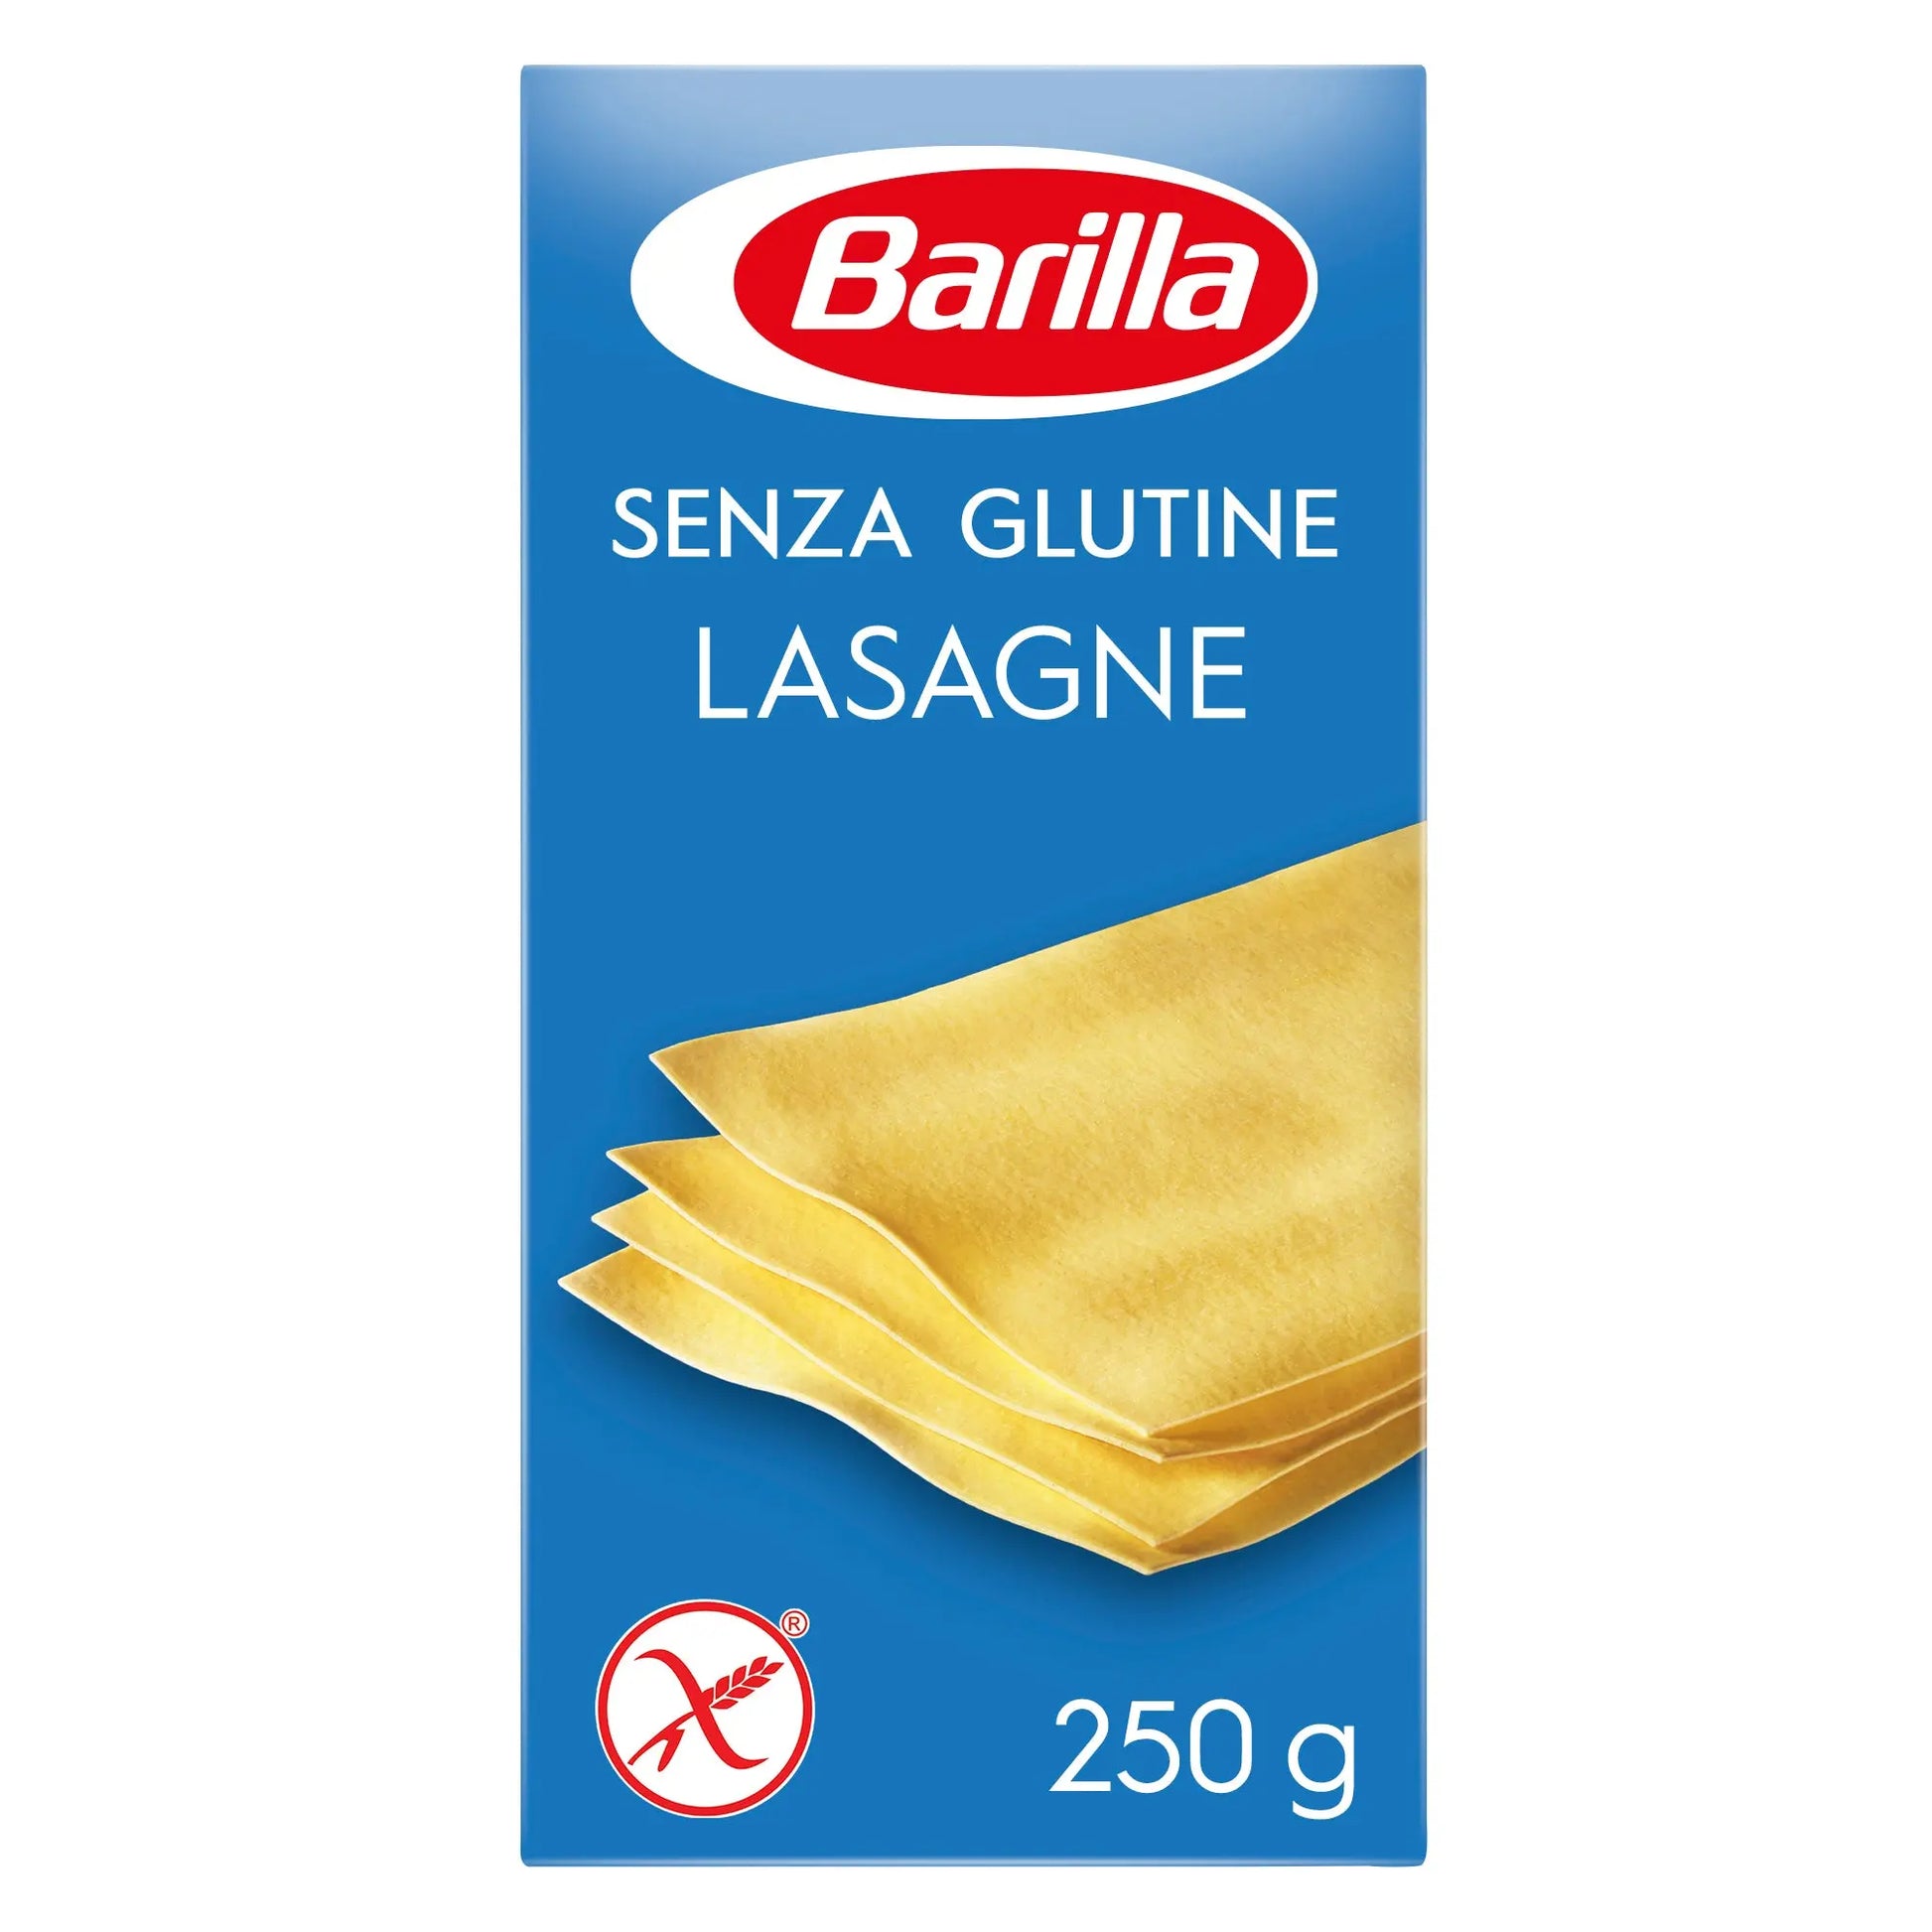 Barilla Pasta Lasagne Gluten Free 250g Barilla